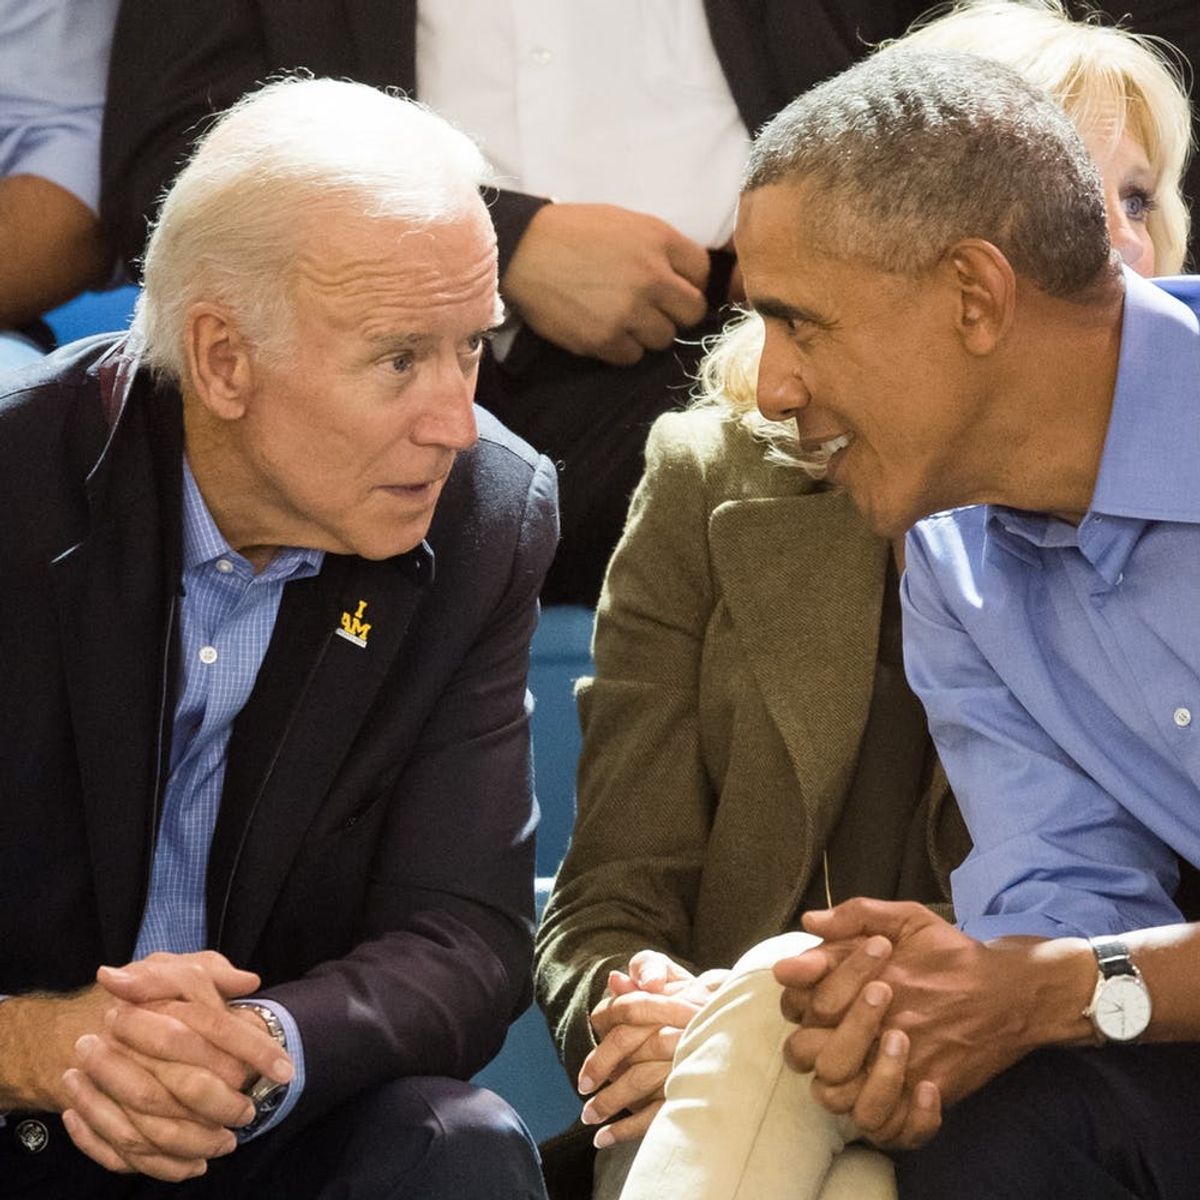 Barack Obama Created His Own Meme to Wish Joe Biden a Happy Birthday